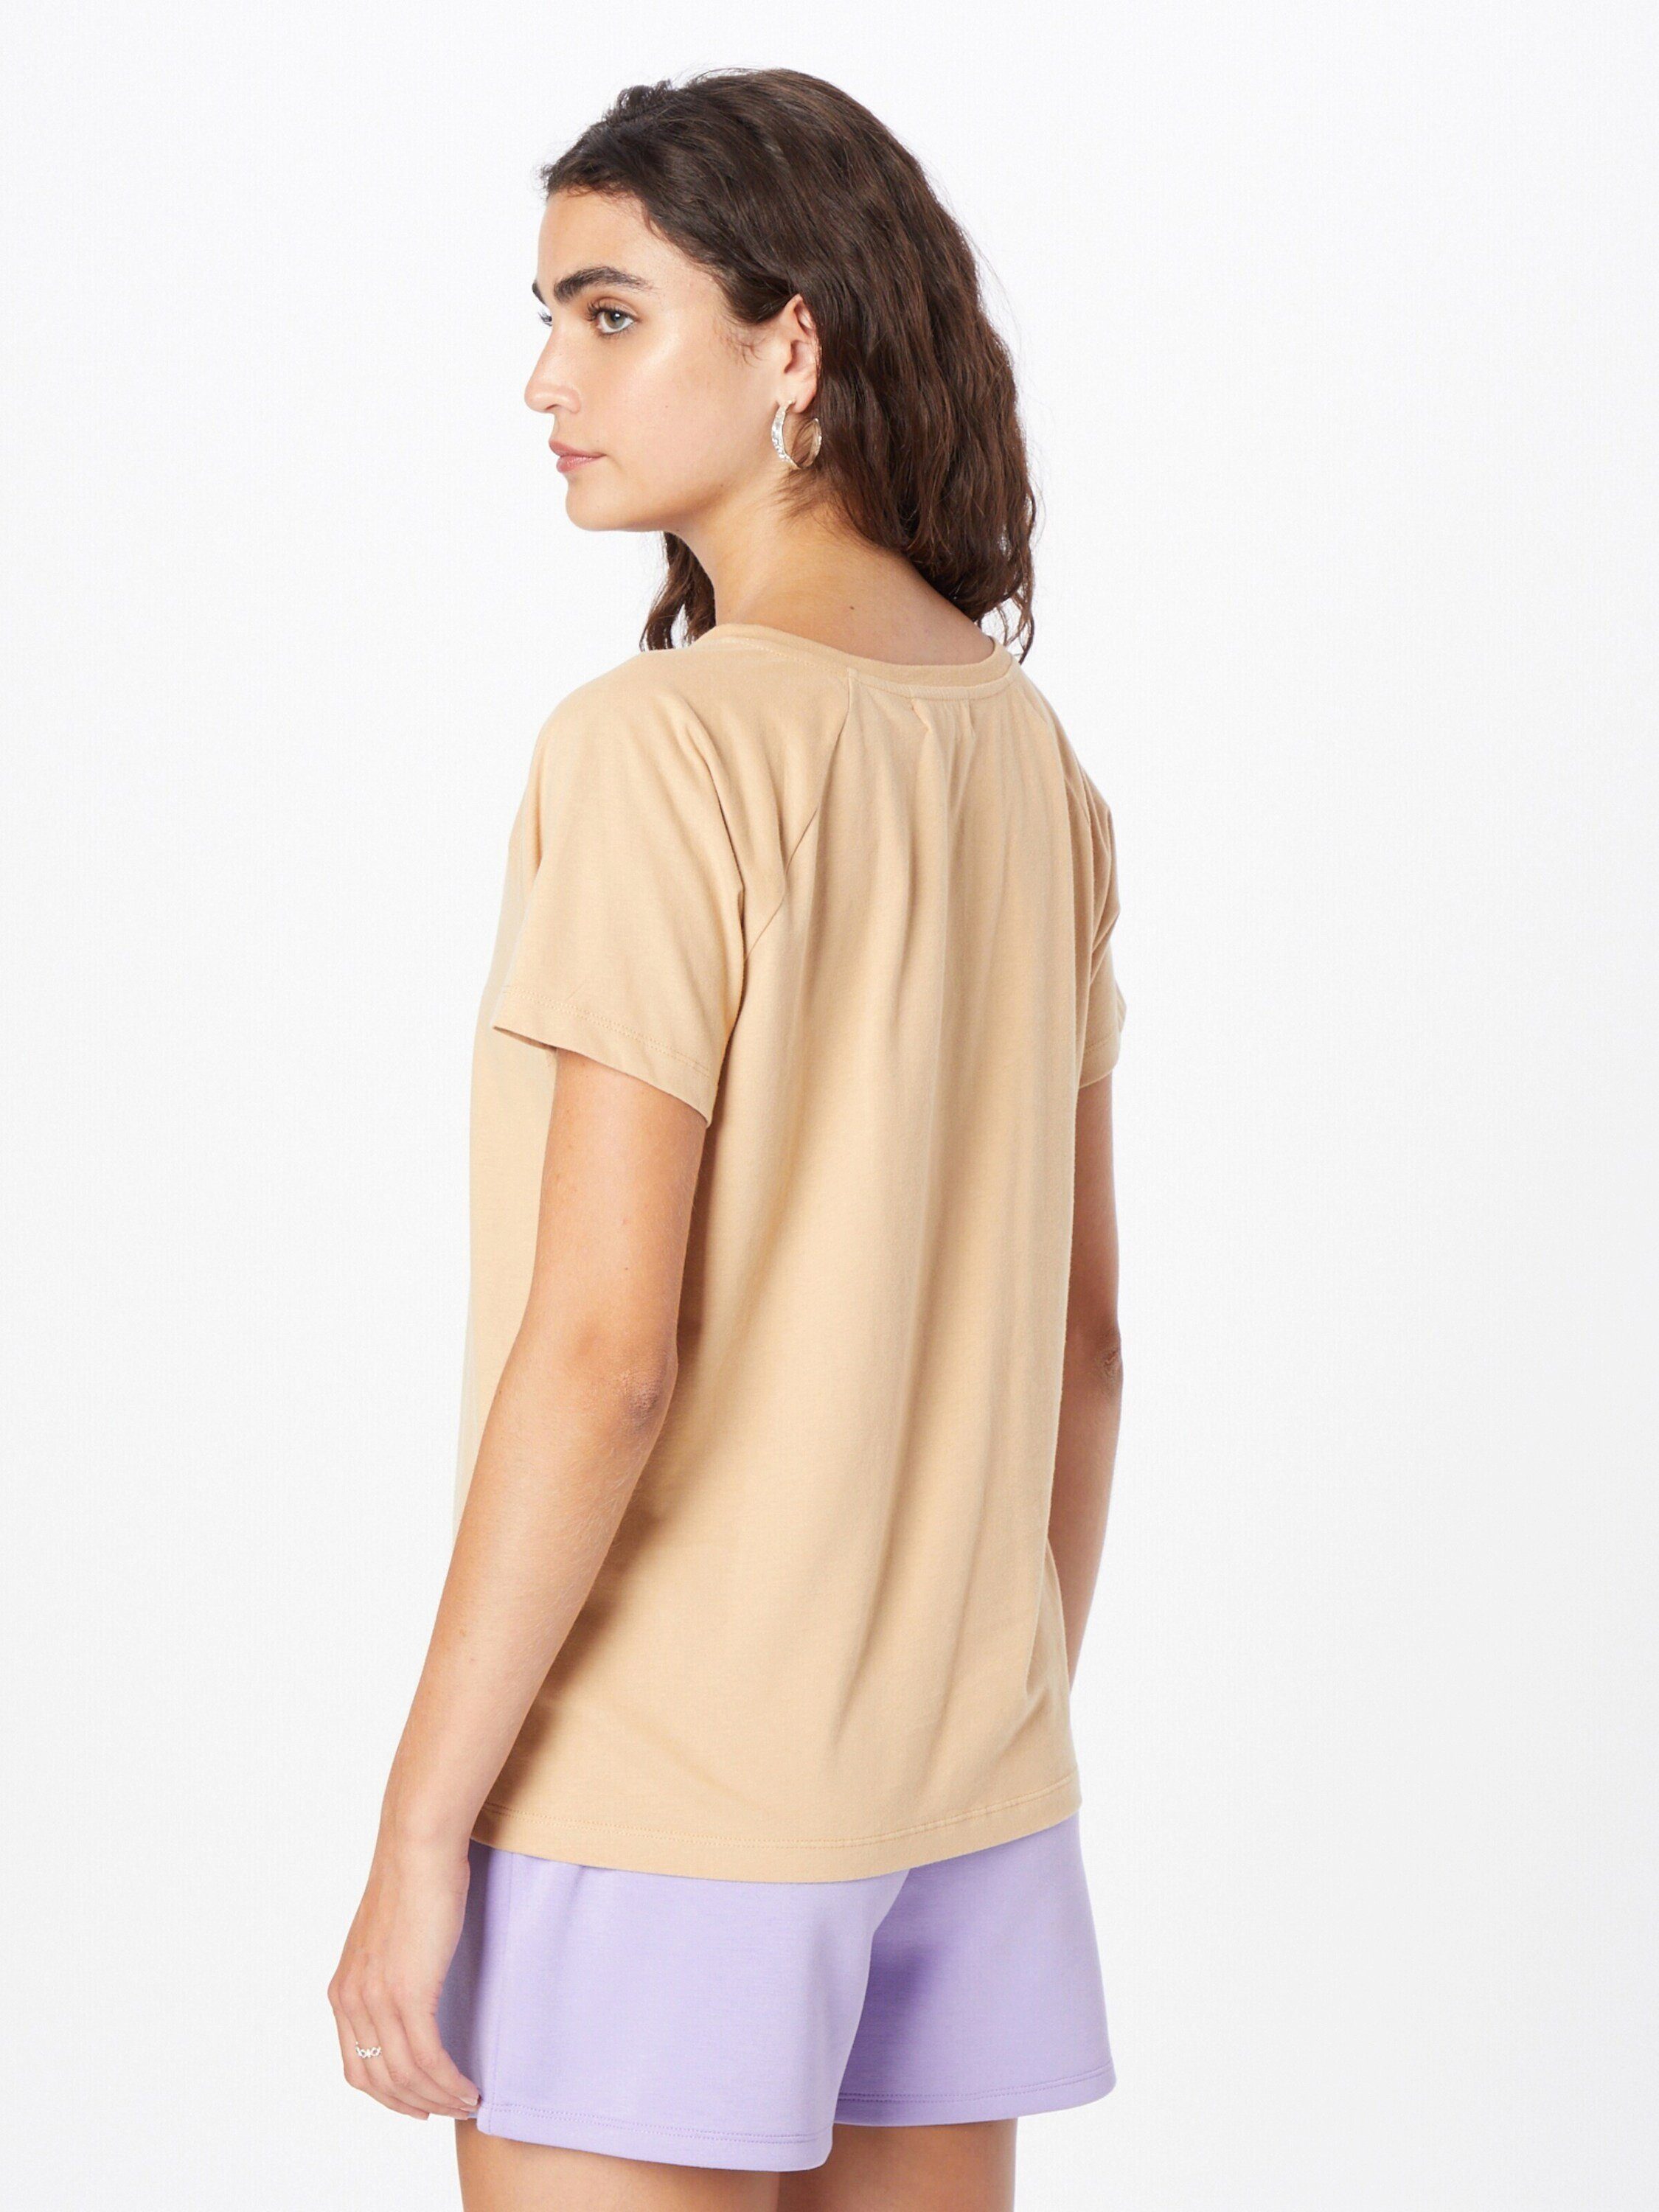 Derbe T-Shirt Kegelrobbe (1-tlg) Plain/ohne caramel Details 817